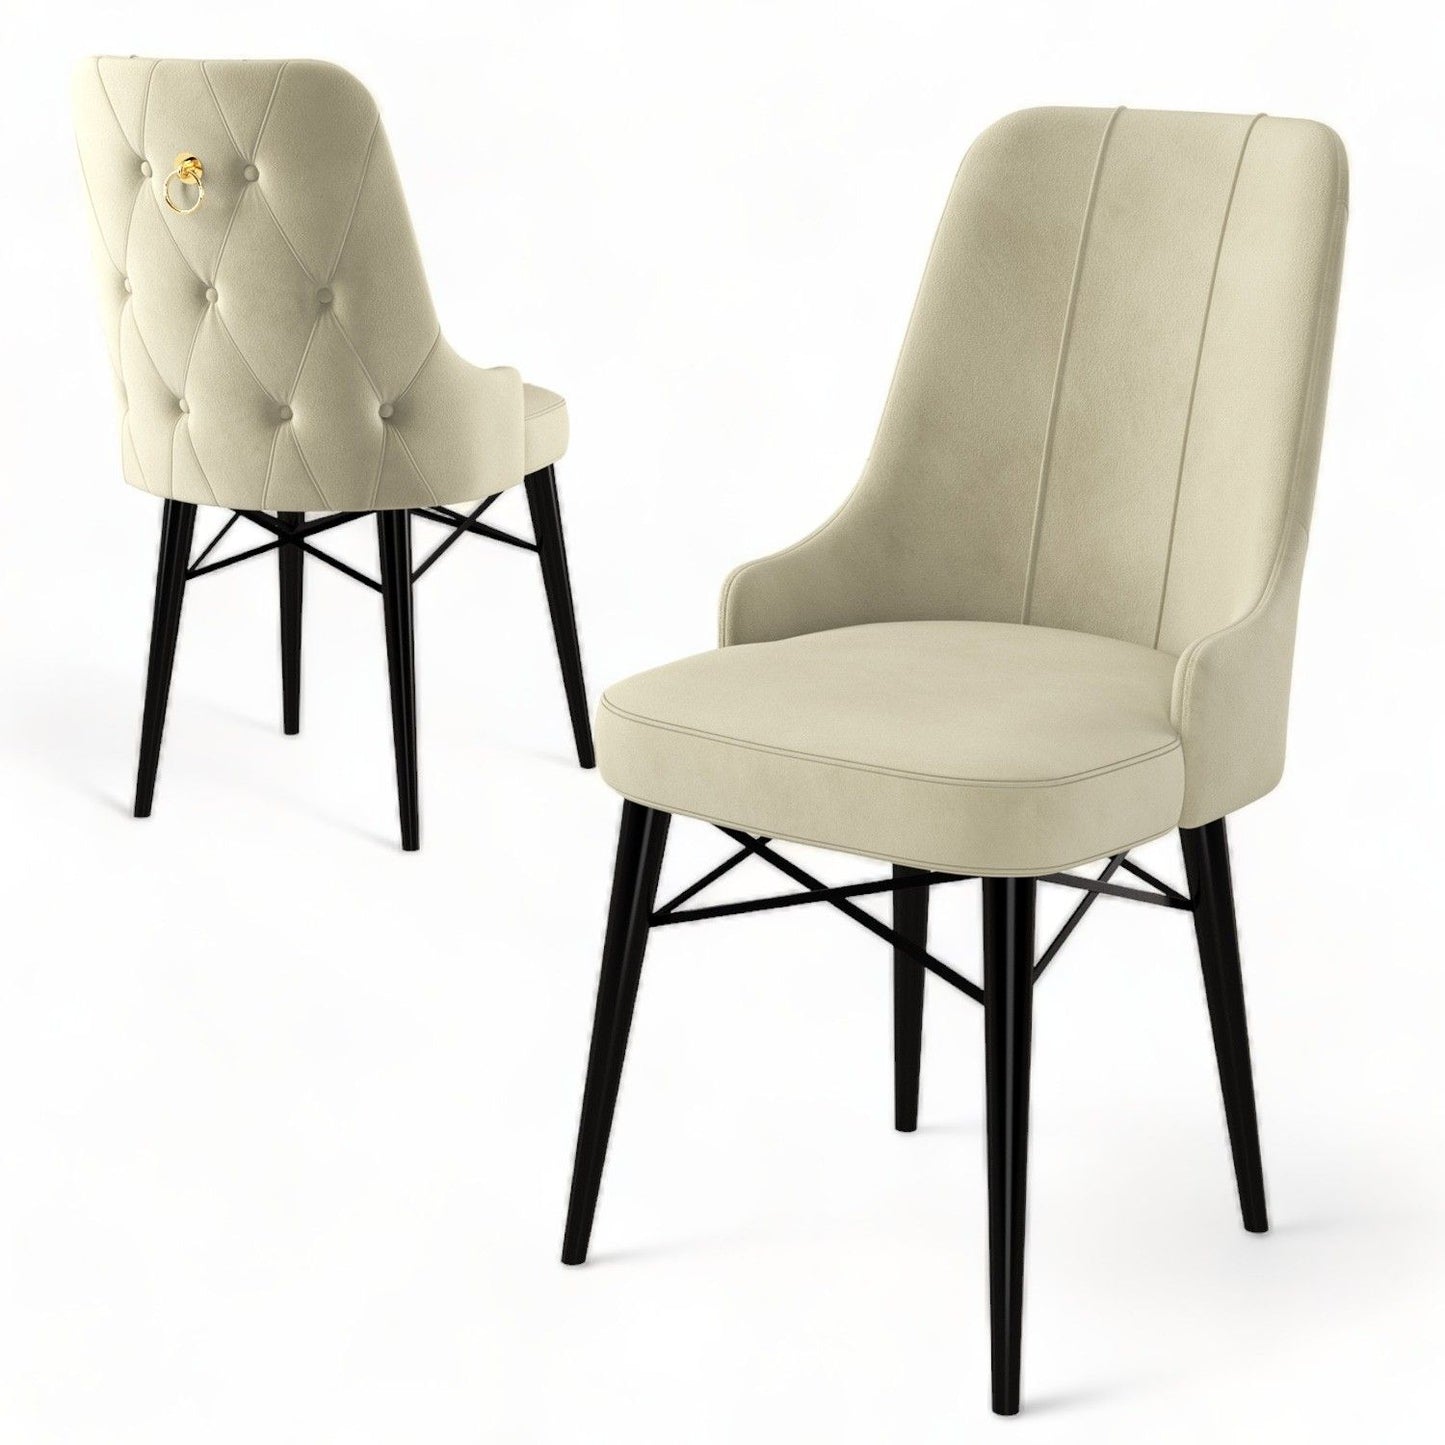 Pare - Cream, Black - Chair Set (4 Pieces)